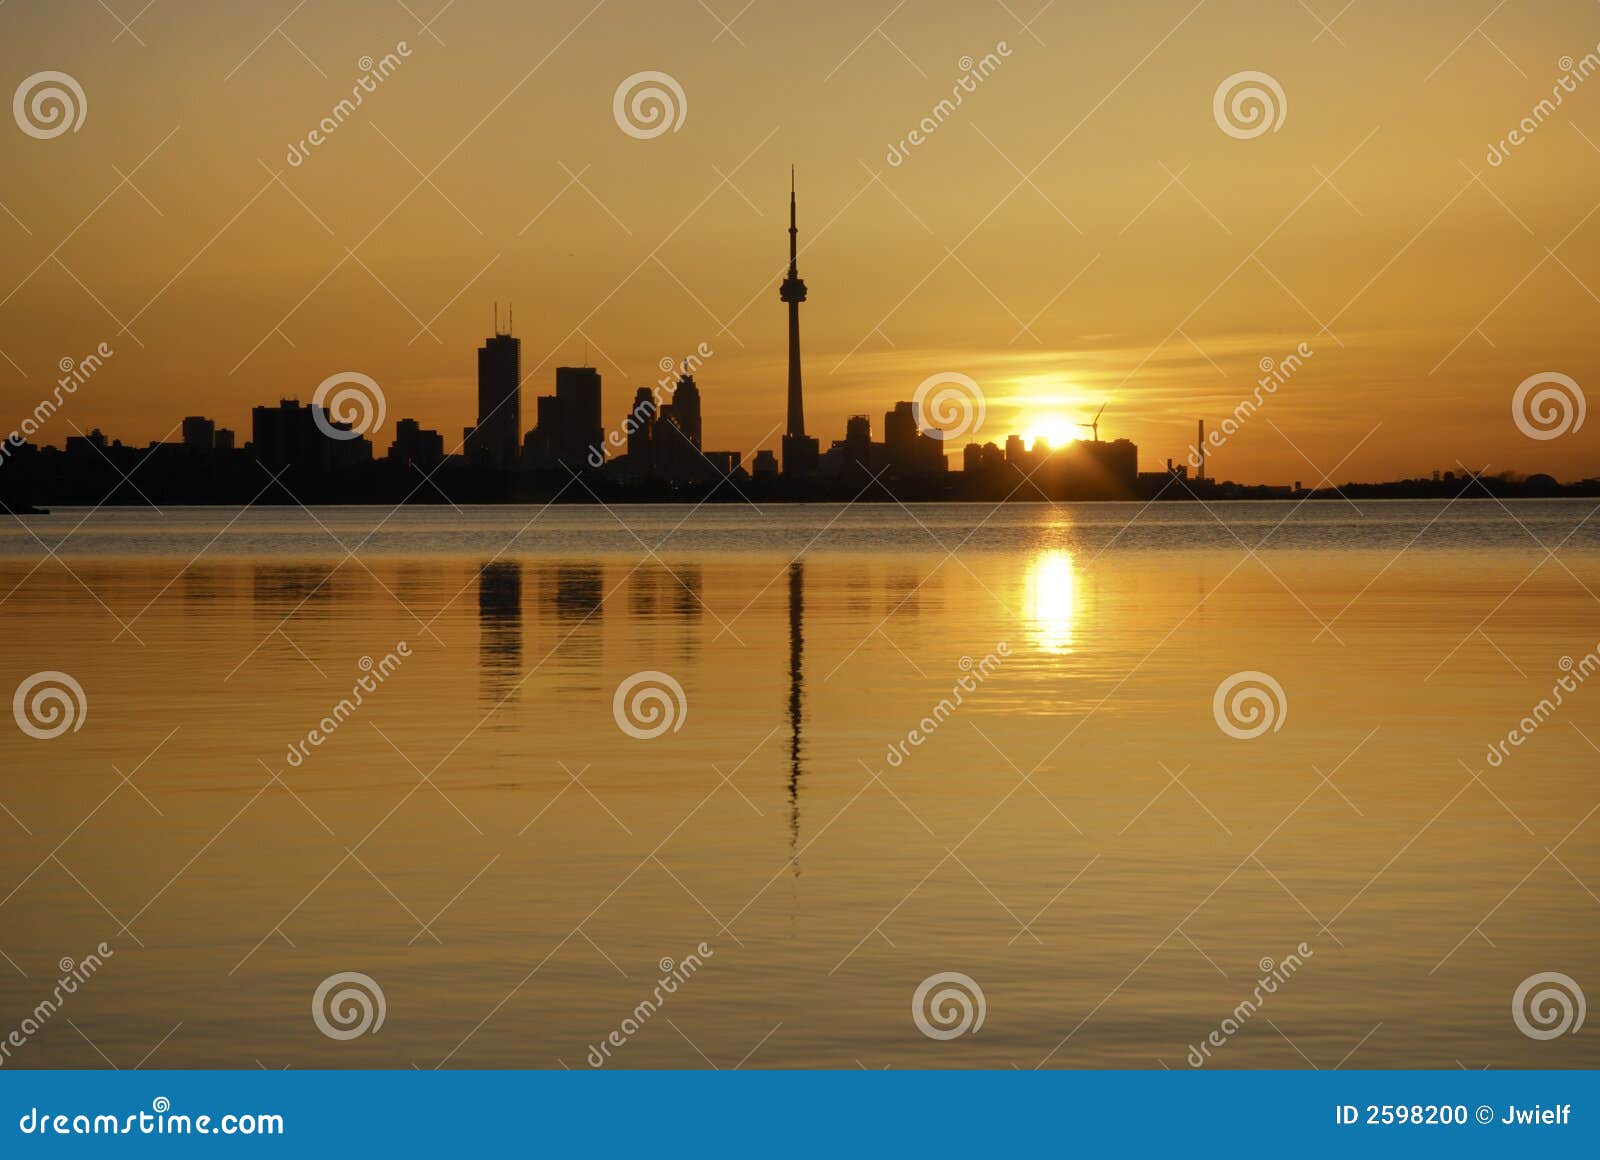 Toronto sunrise sunset